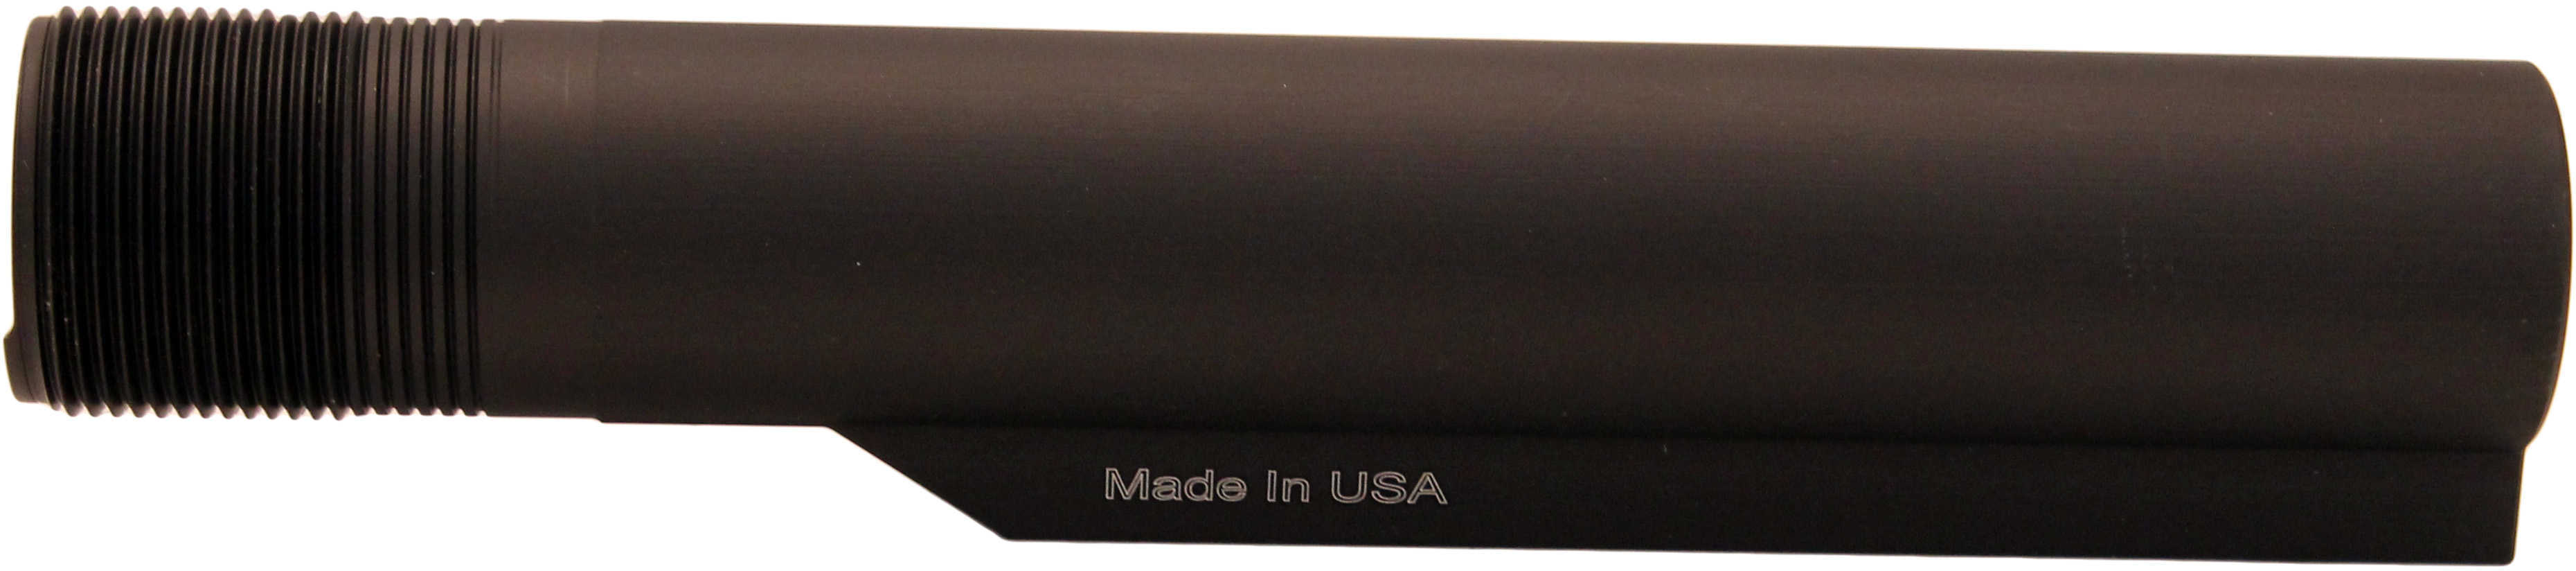 Leapers UTG Pro TLU001 Mil-Spec Receiver Extension Tube AR-15 6061-T6 Aluminum Md: